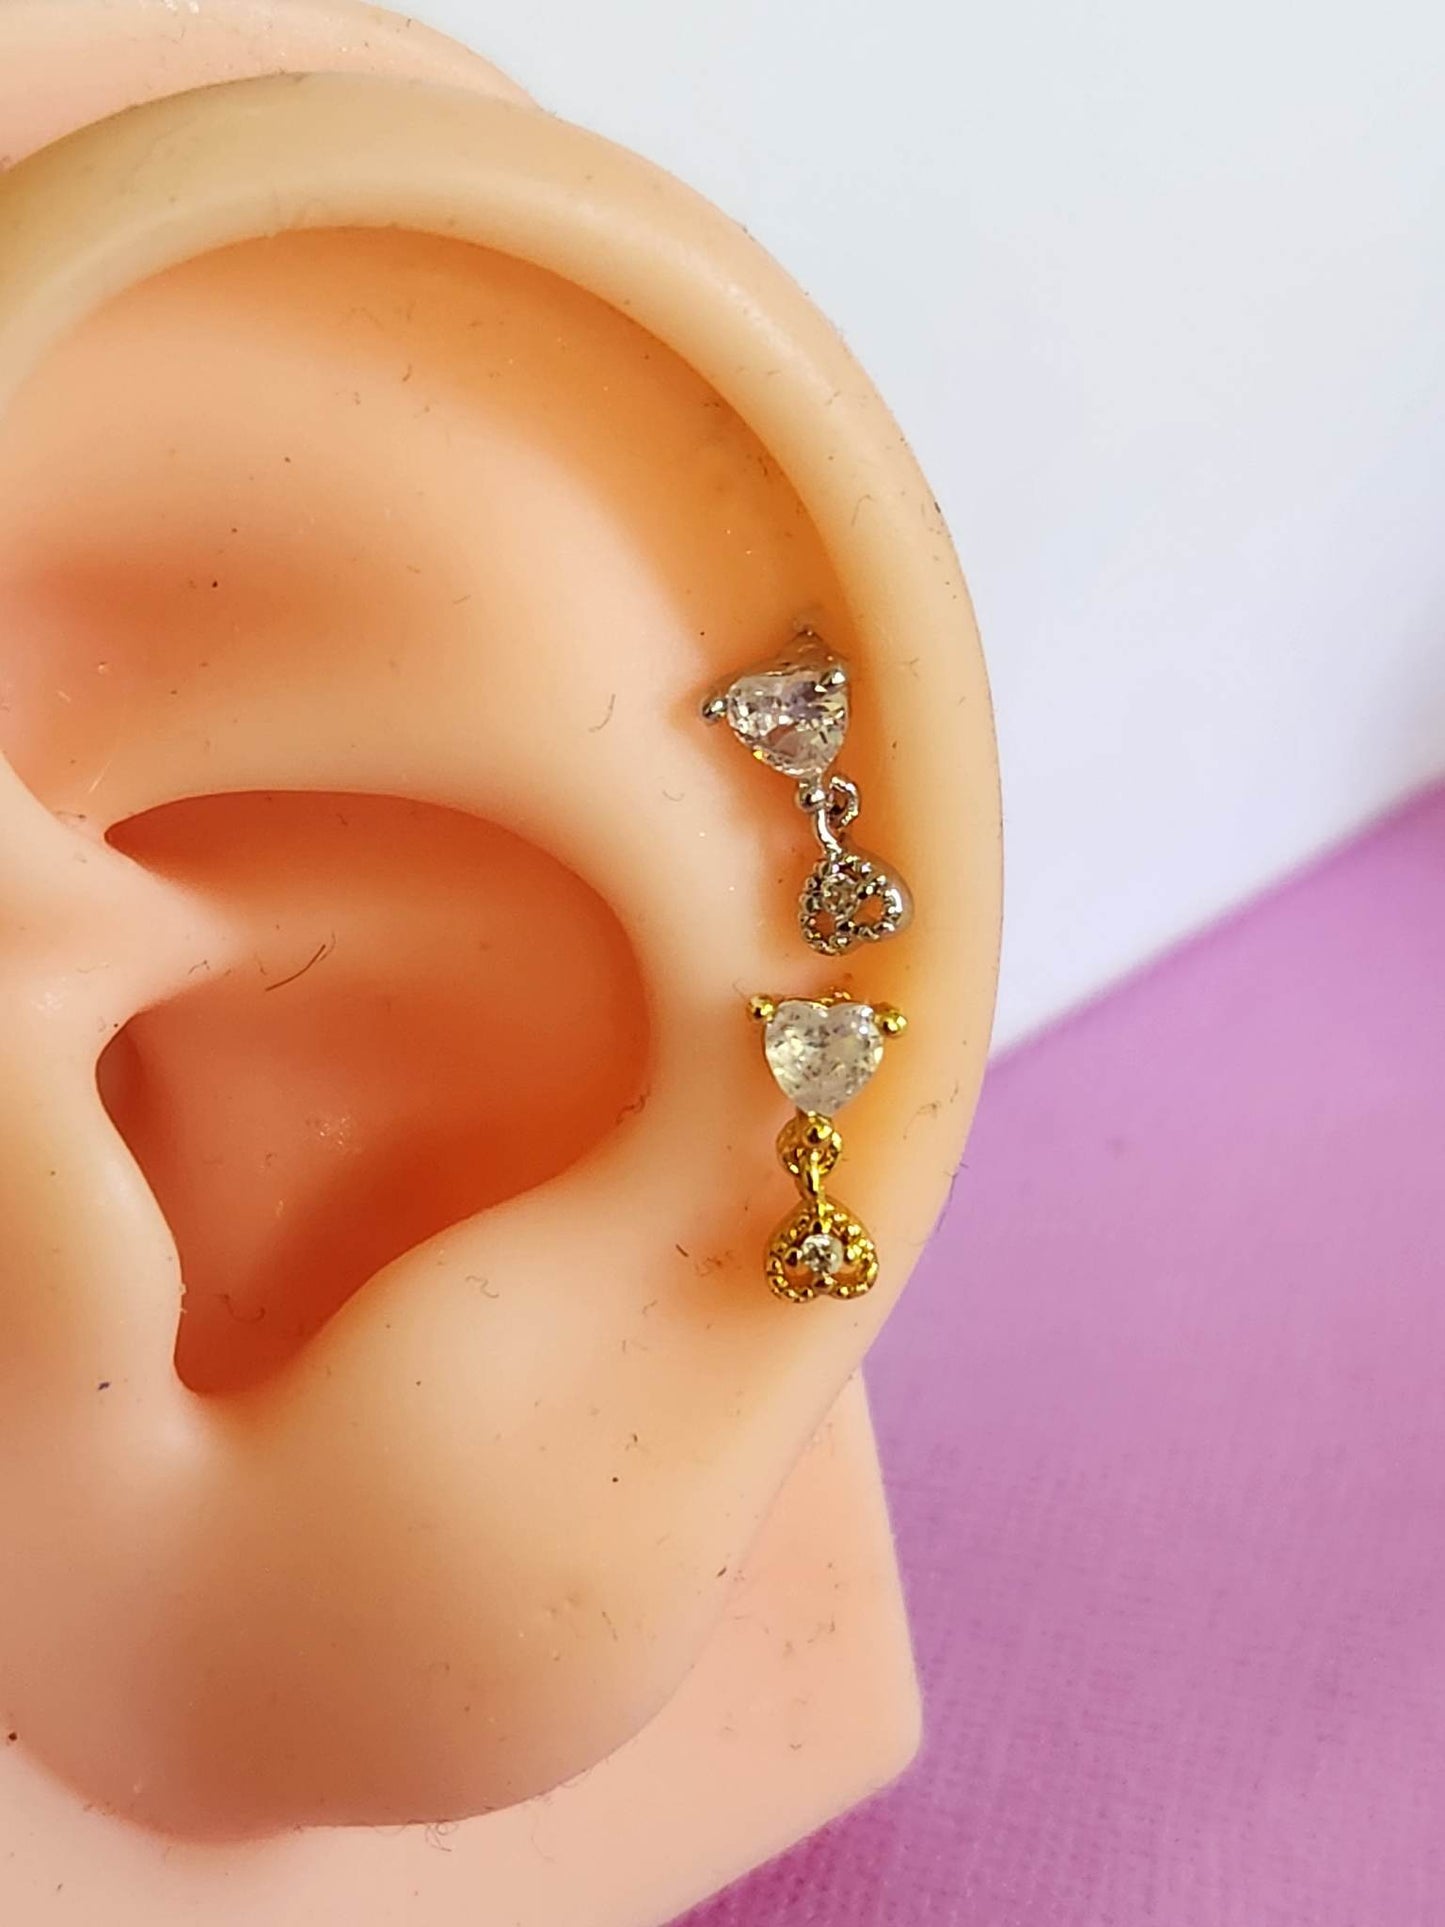 Double Dangle Heart 16g Earrings Design Tragus Daith Cartilage Ear Piercing - Pierced n Proud